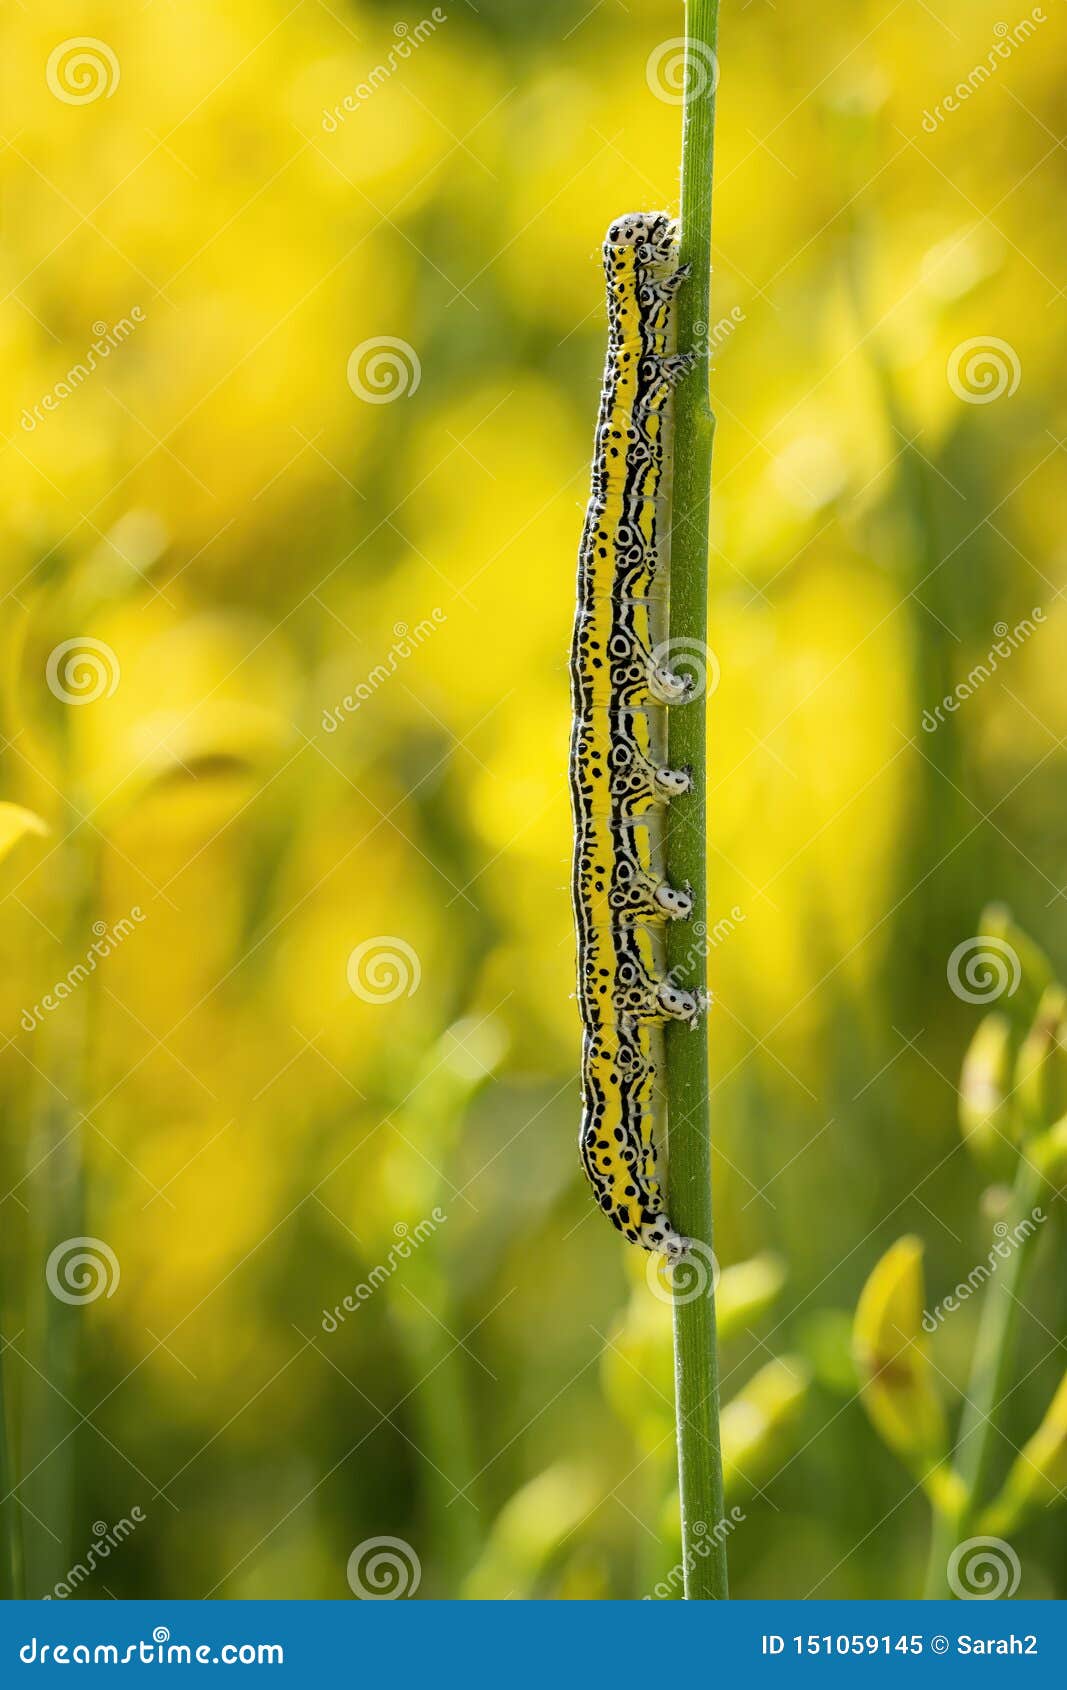 Yellow Caterpillar Identification Chart